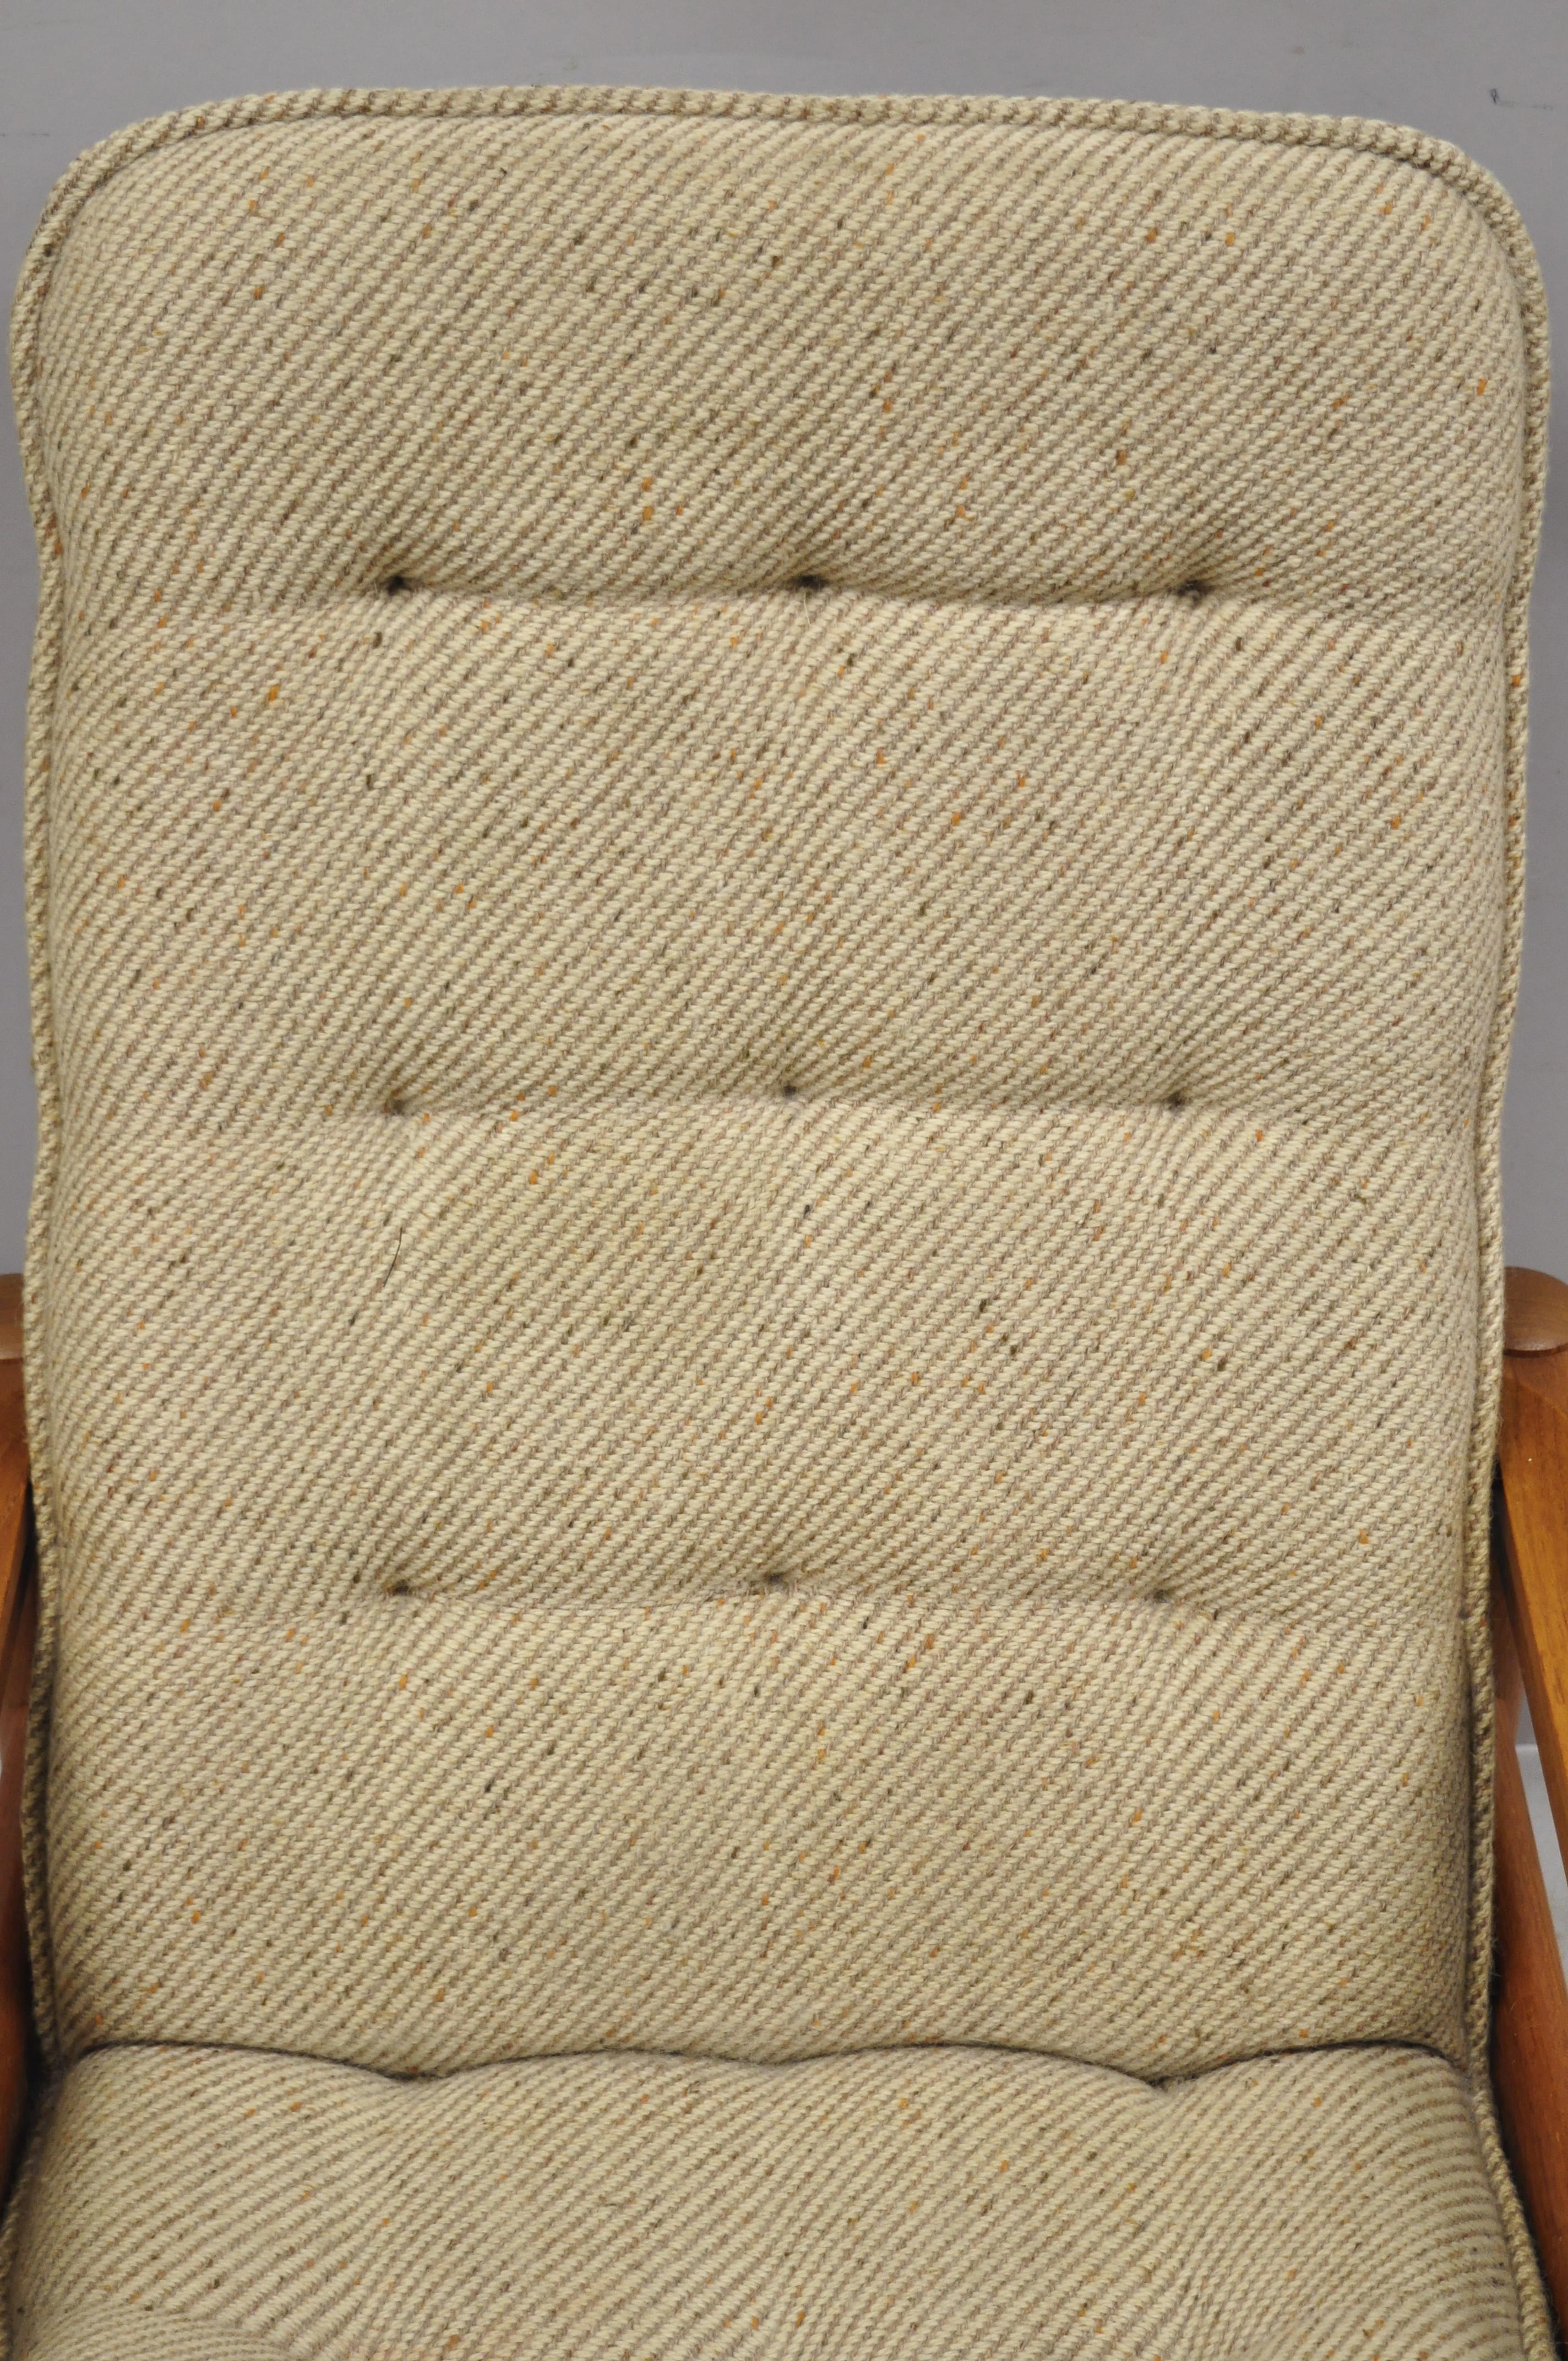 Fabric Domino Mobler Mid Century Danish Modern Teak Wood Upholstered Lounge Chair